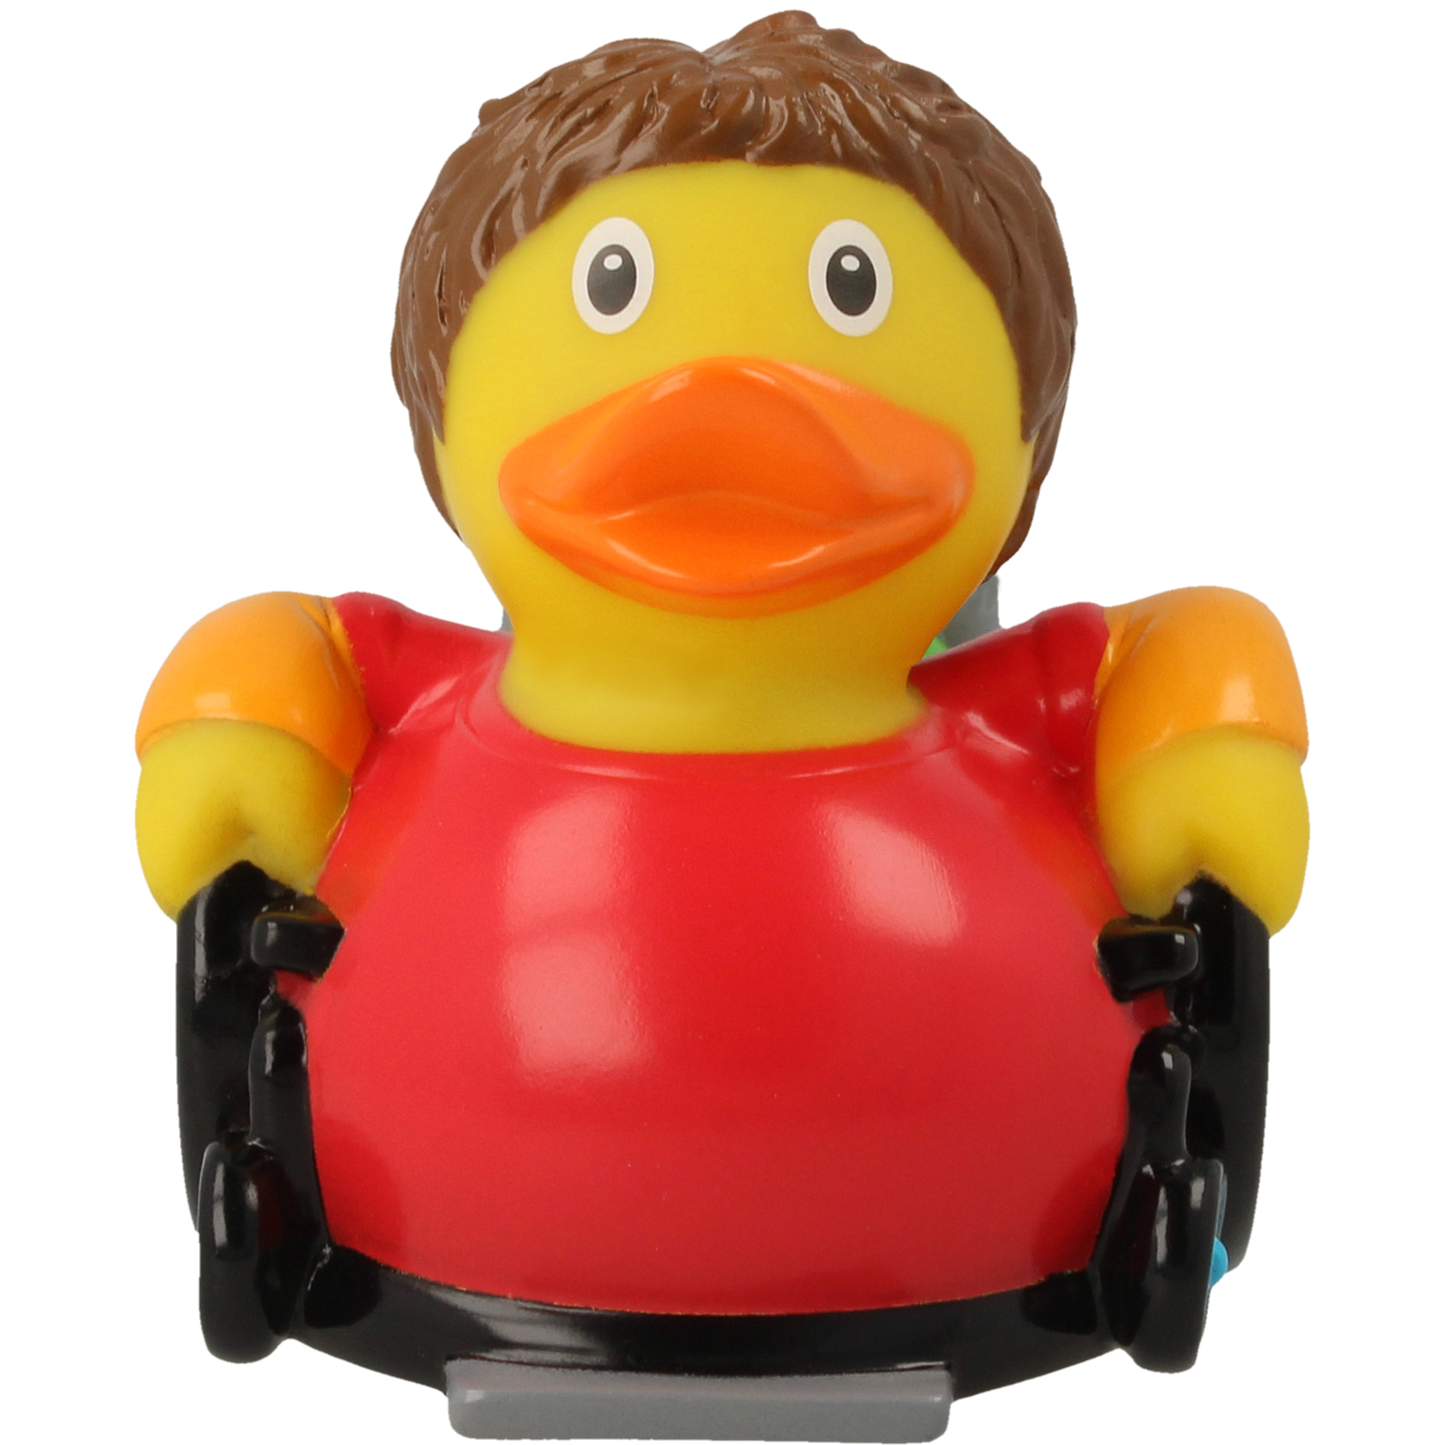 Duck Wheelchair.